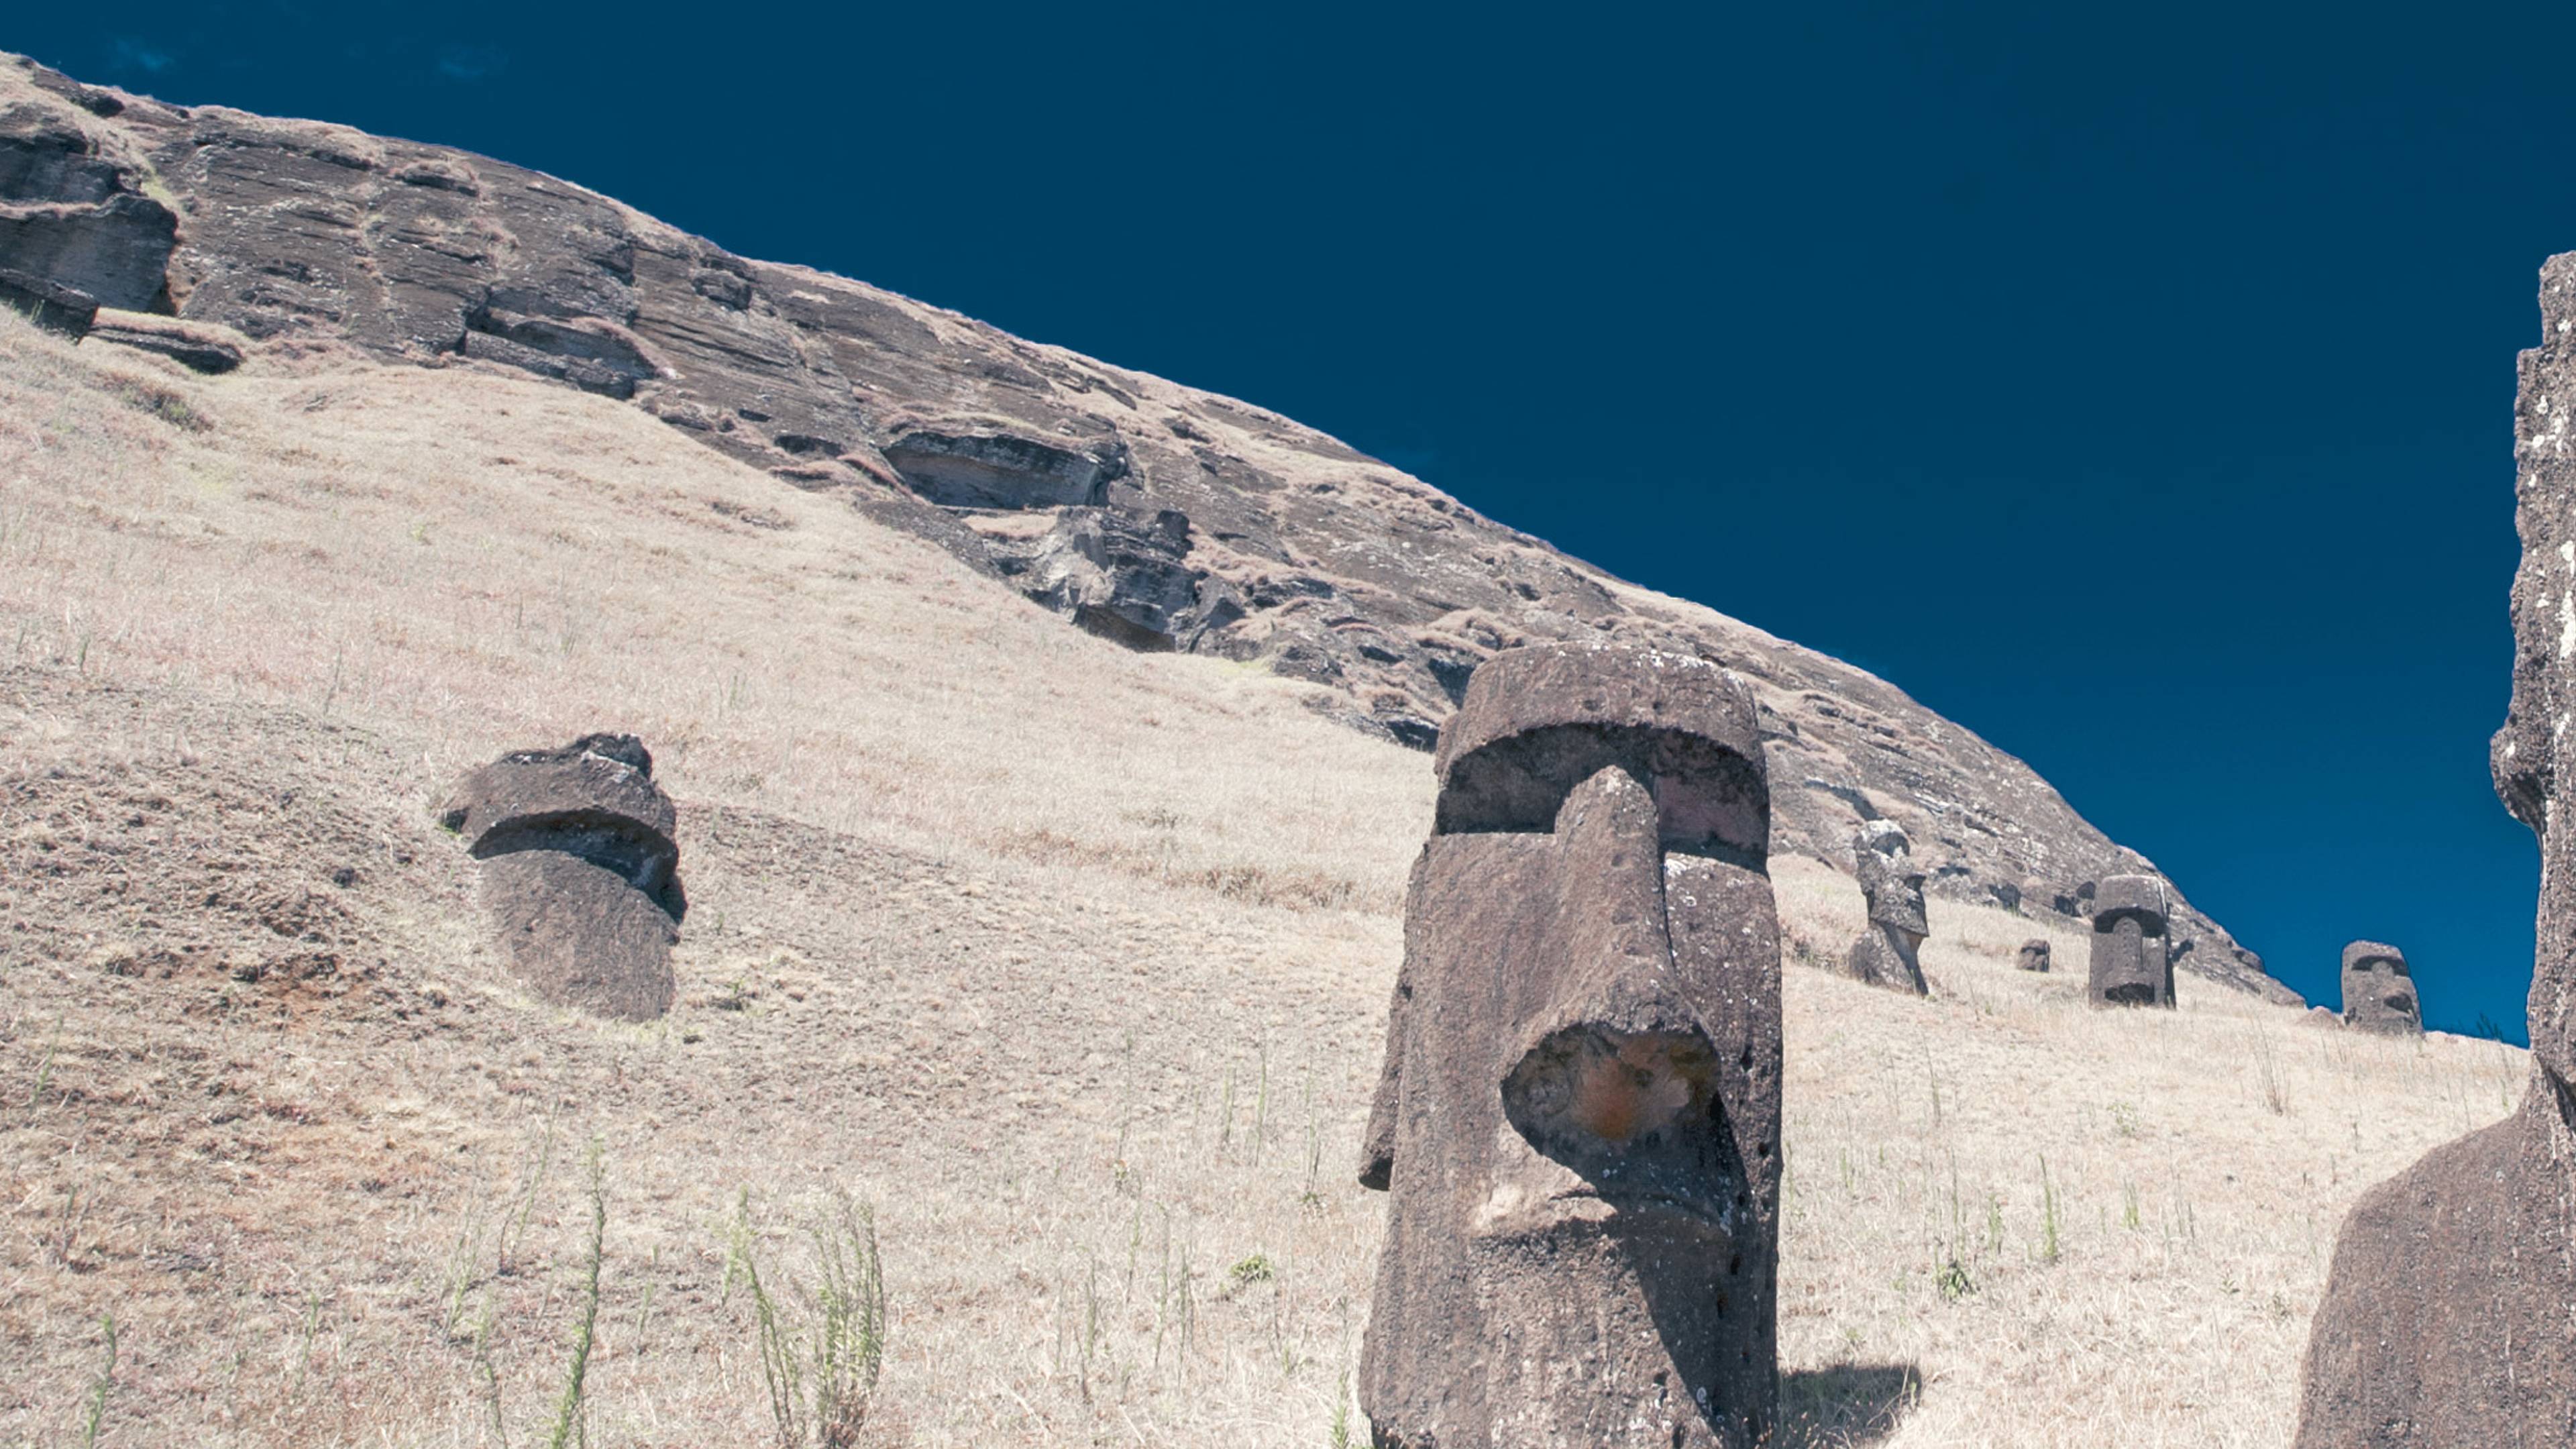 Moai heads on Easter Island, and island off Chile